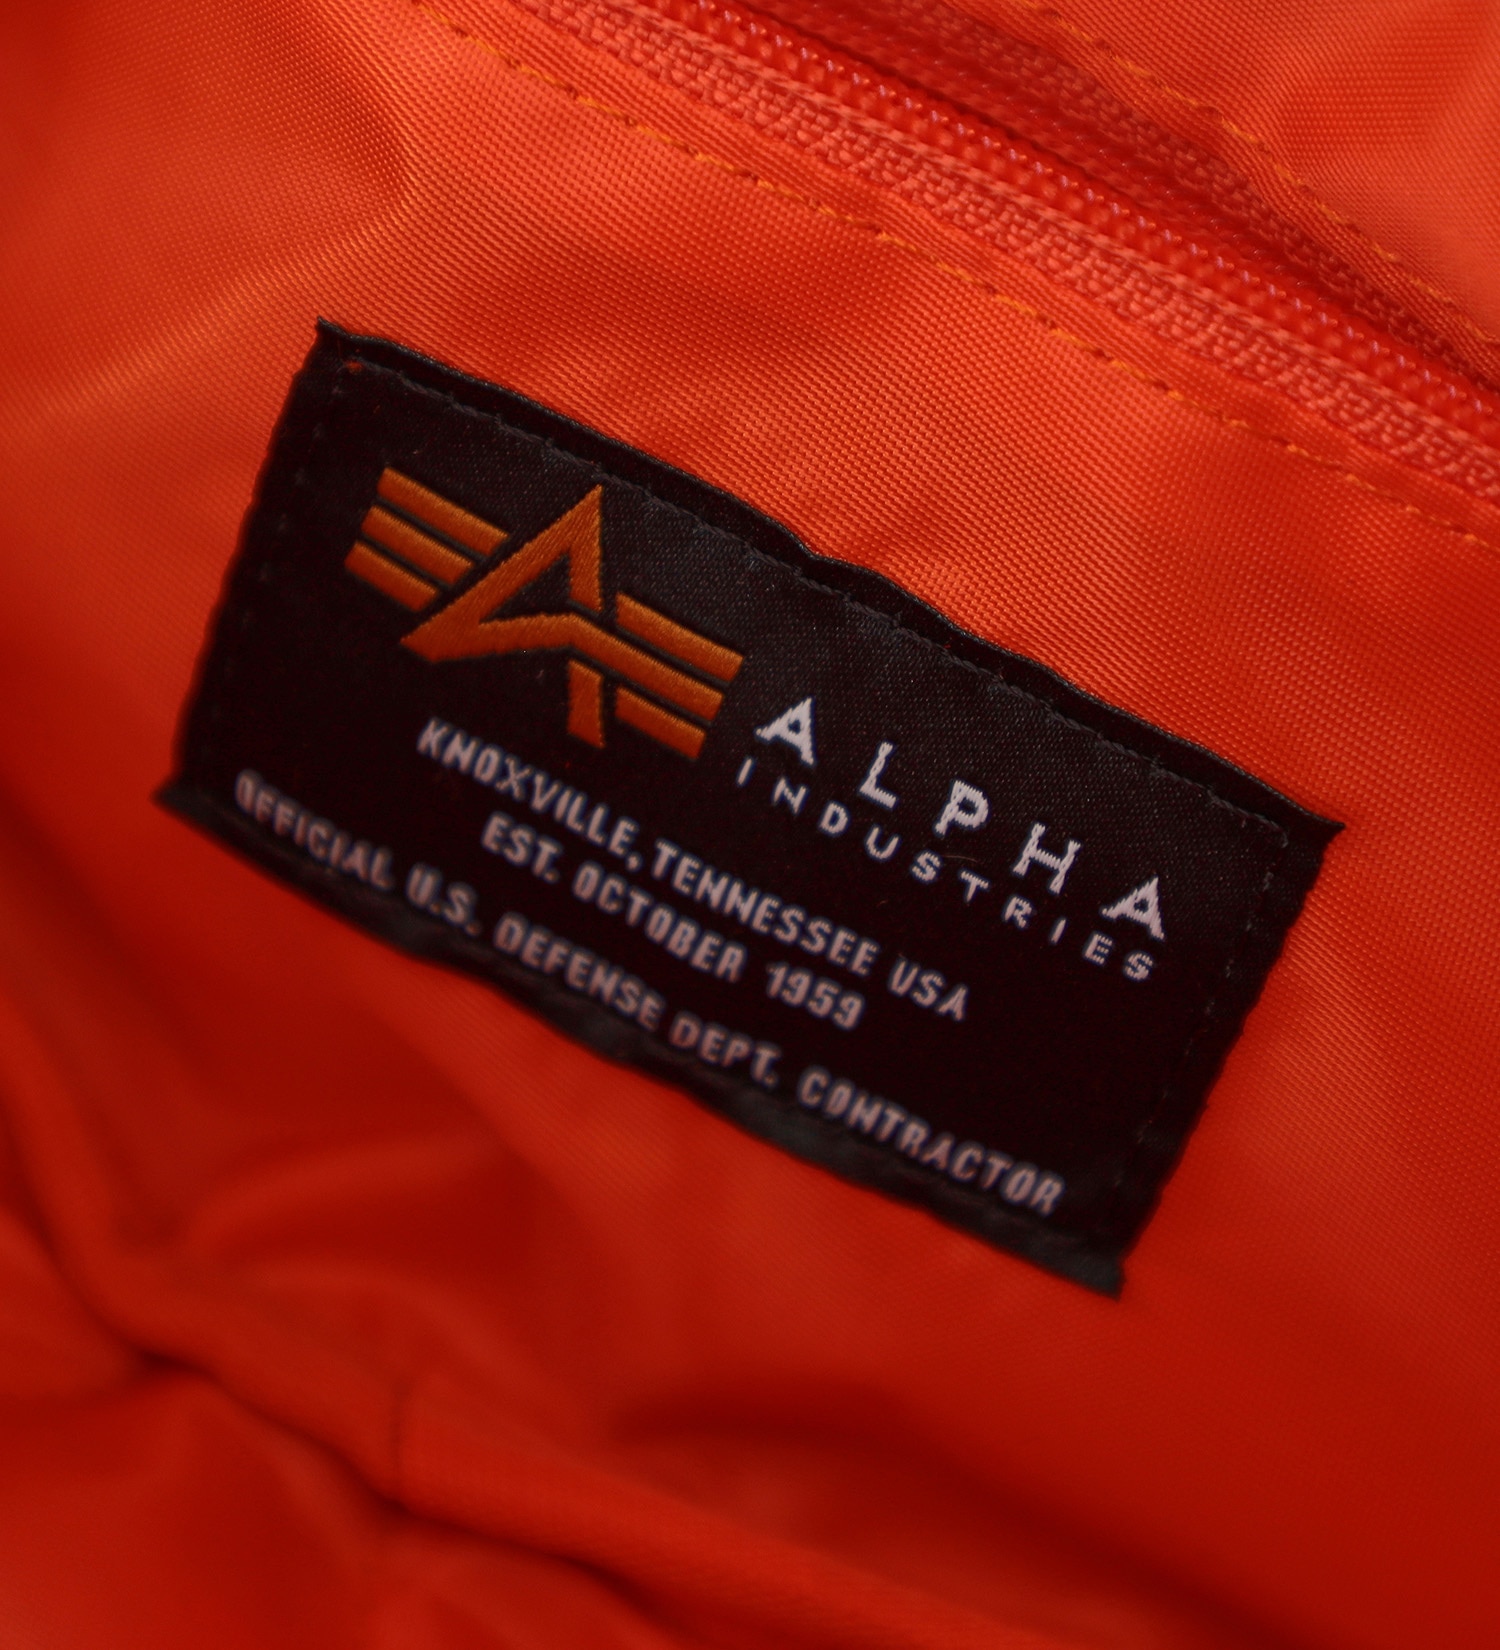 ALPHA(アルファ)のパッチド ウエストバッグ コーデュラ|バッグ/ボディバッグ/ウェストポーチ/メンズ|ブラック